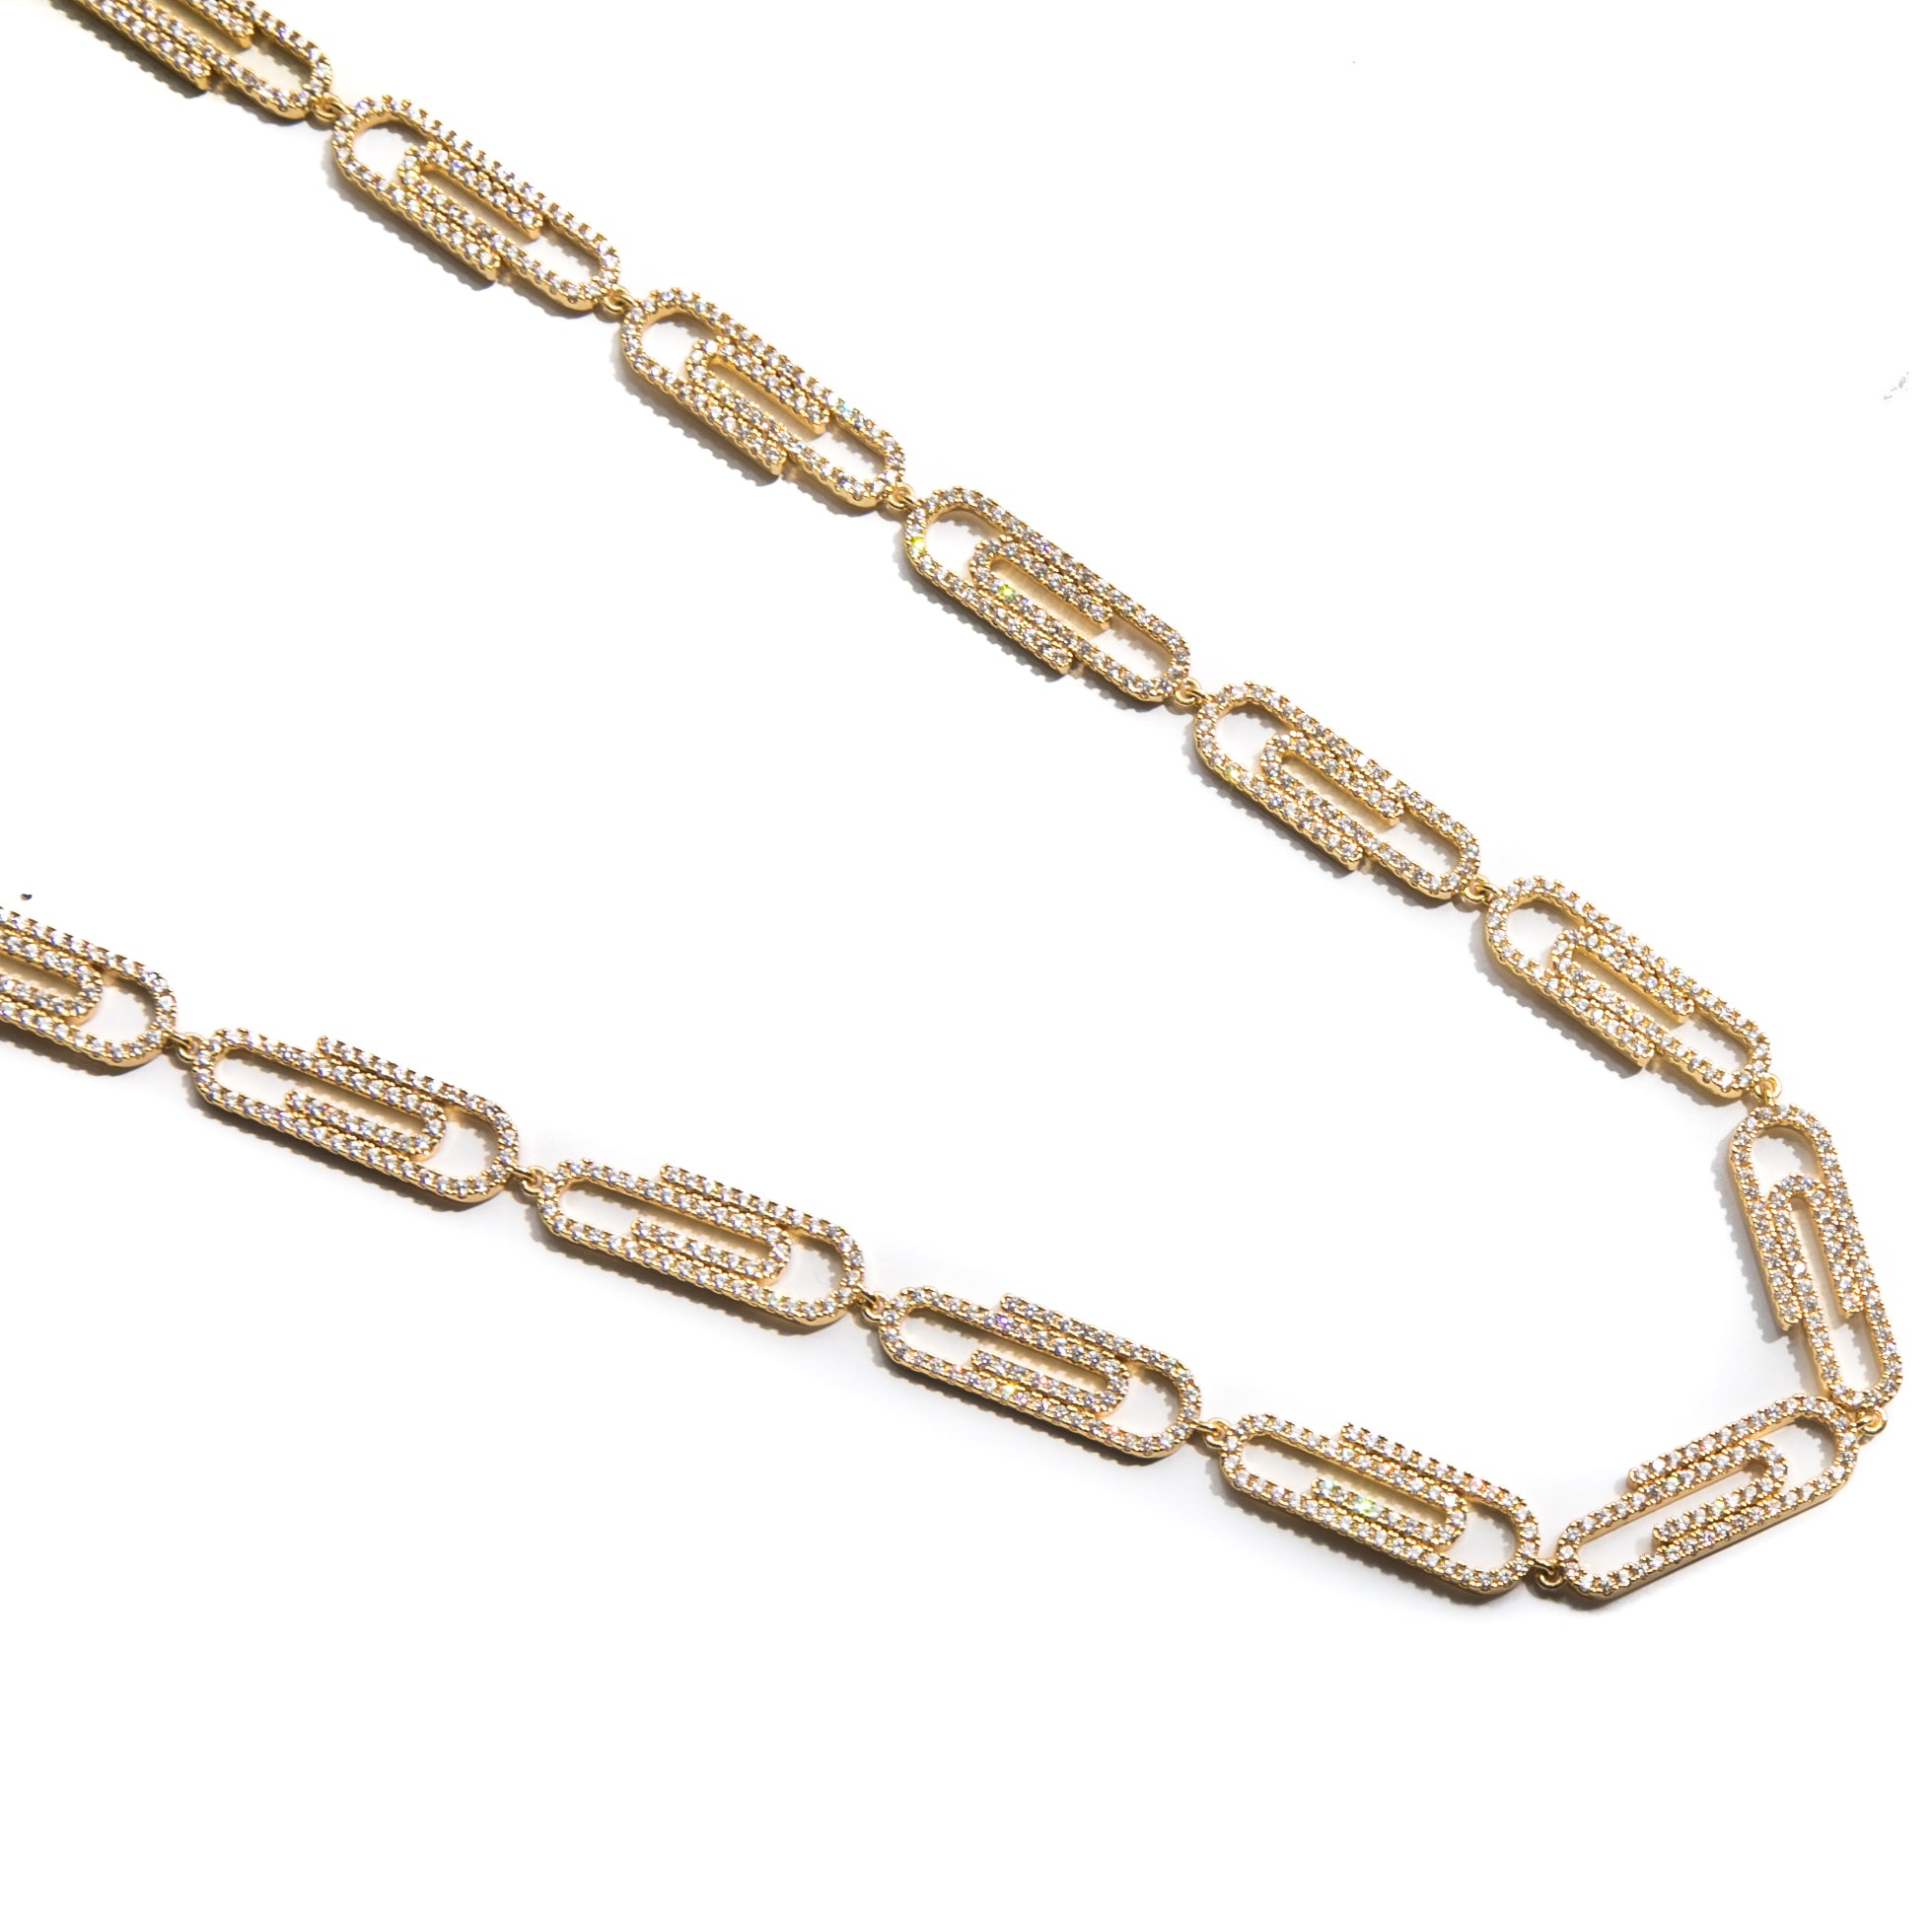 Paper Clip Necklace - ACCESSORIES, Golden Gilt, SNEAKER STUDIO, GOLDEN GILT, DESIGN BY TSS